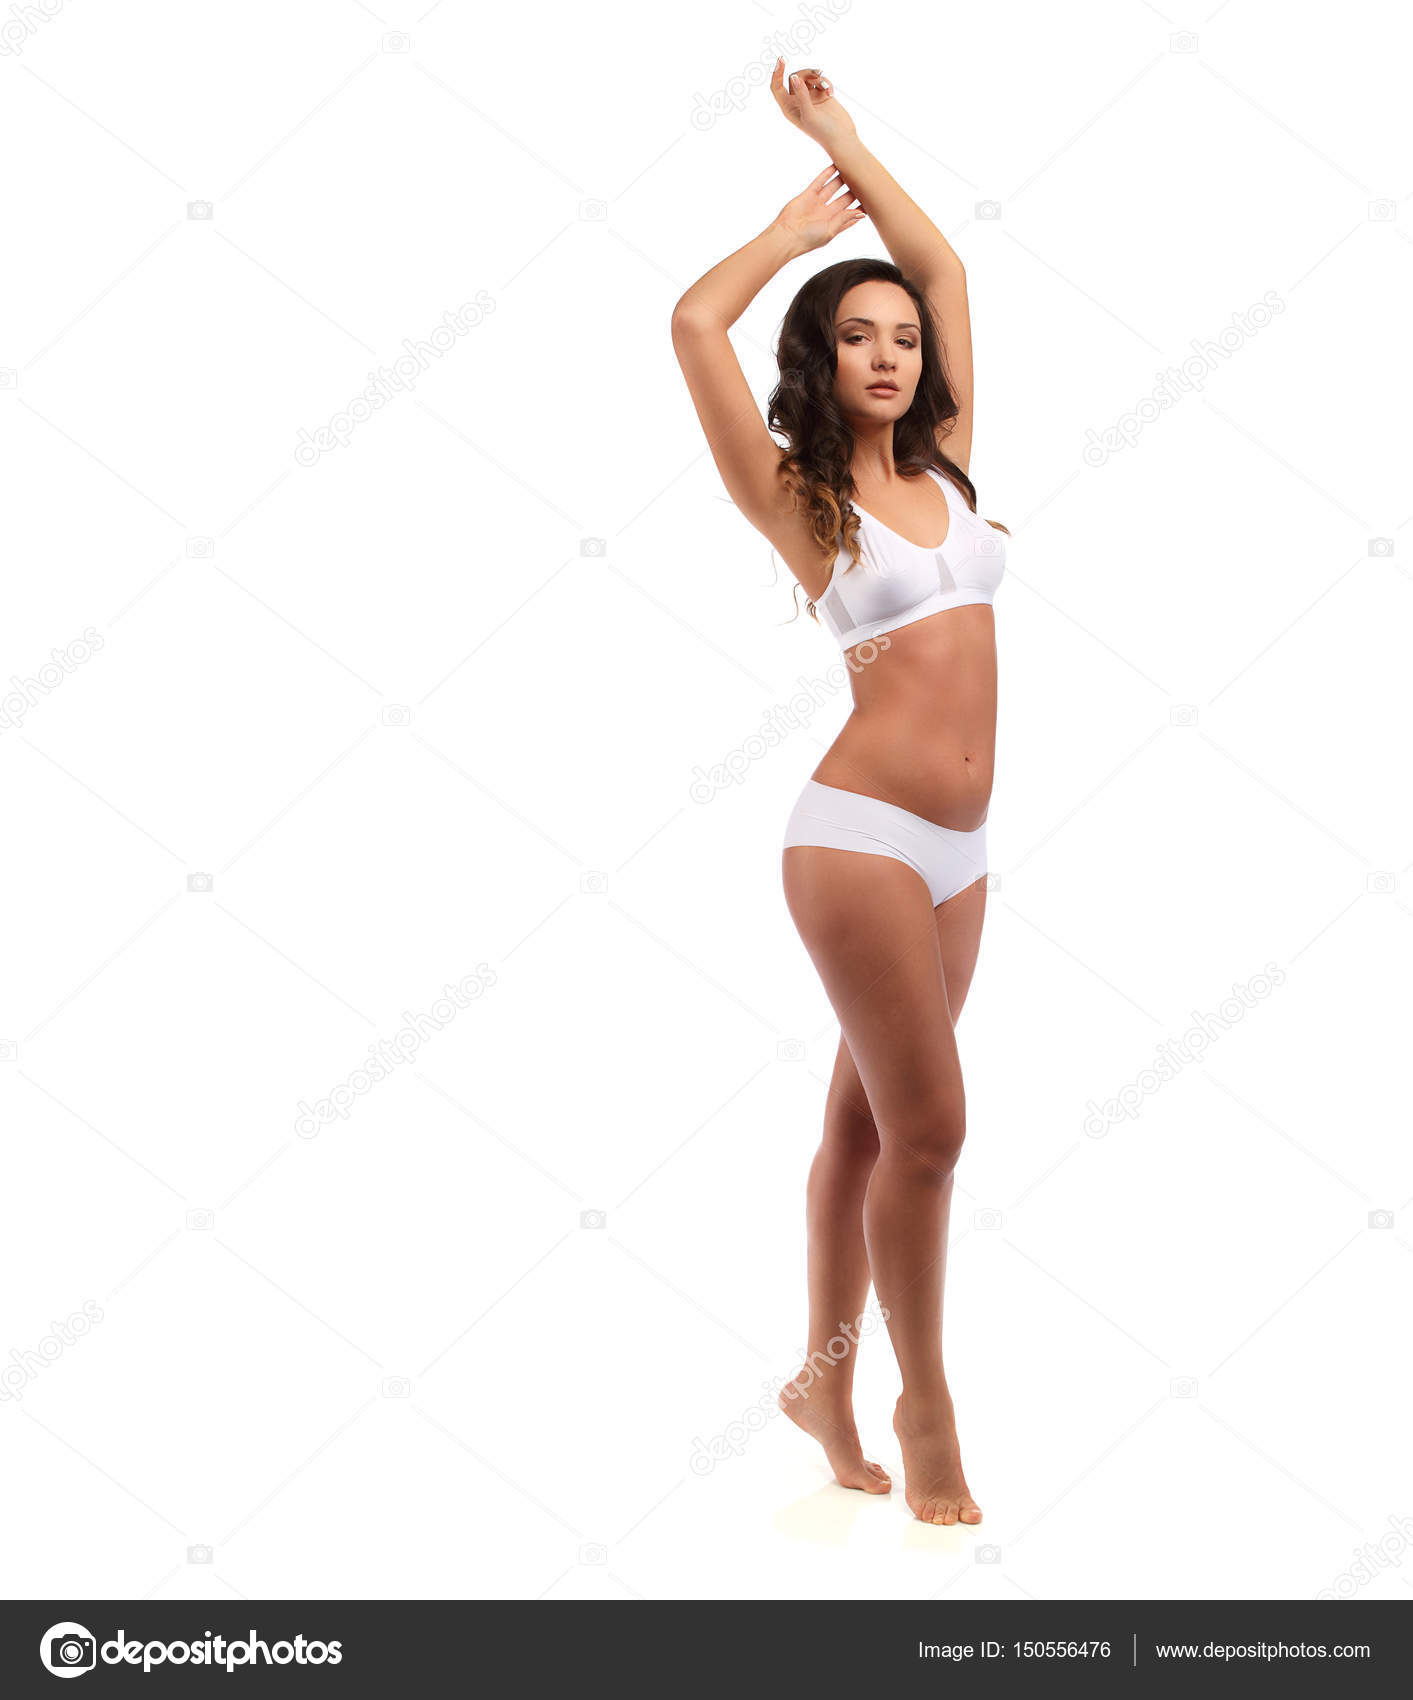 https://st3.depositphotos.com/3071501/15055/i/1600/depositphotos_150556476-stock-photo-woman-standing-in-white-cotton.jpg